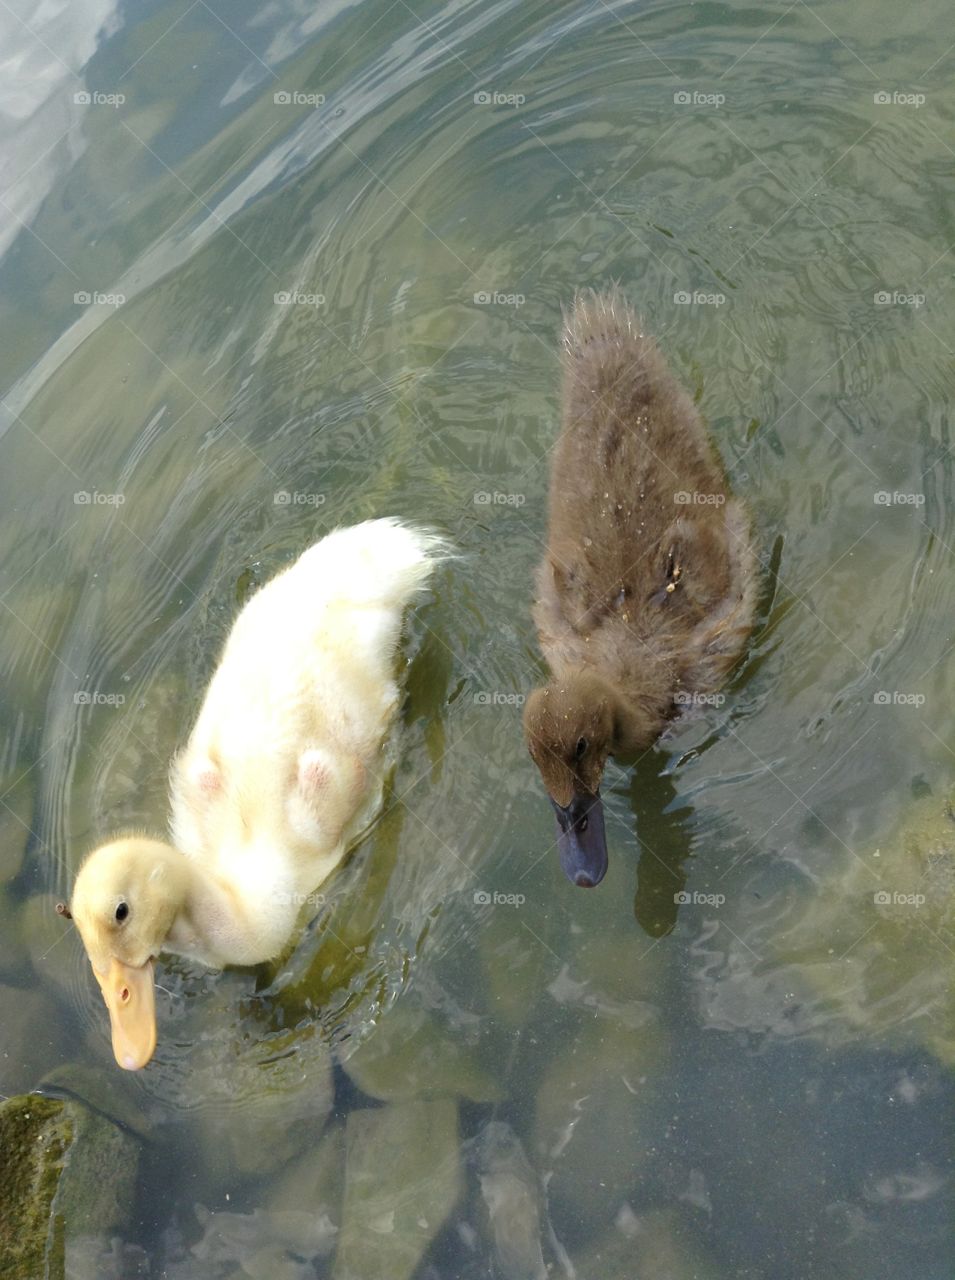 My brother's pet duckies